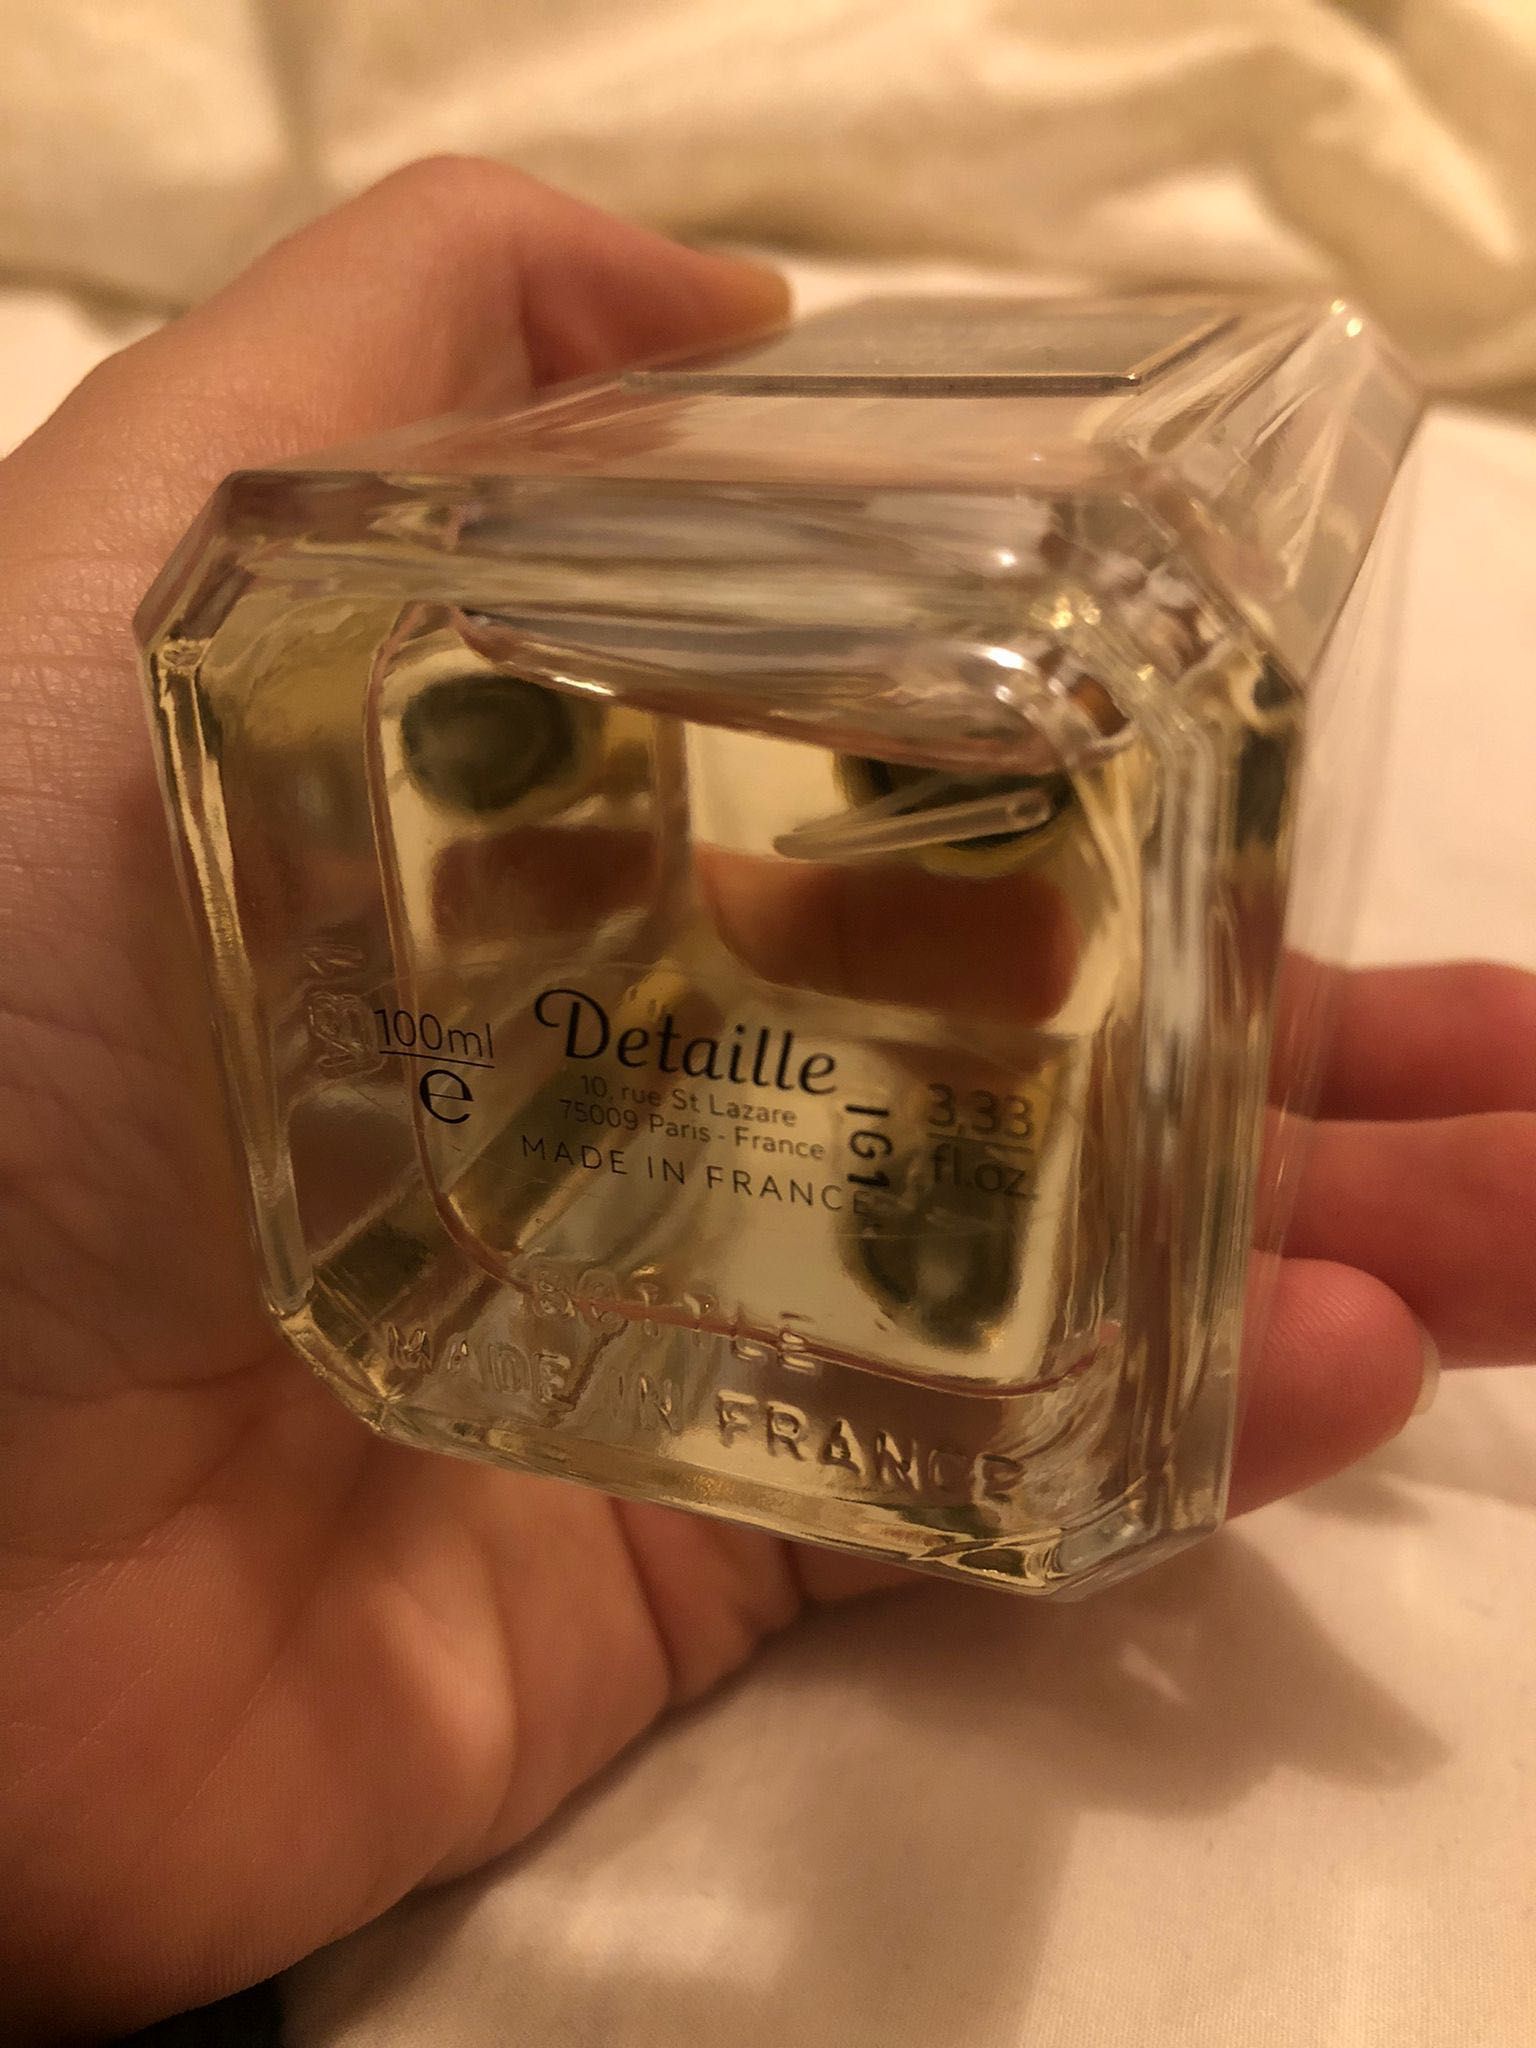 Perfume Jump Detaille Paris